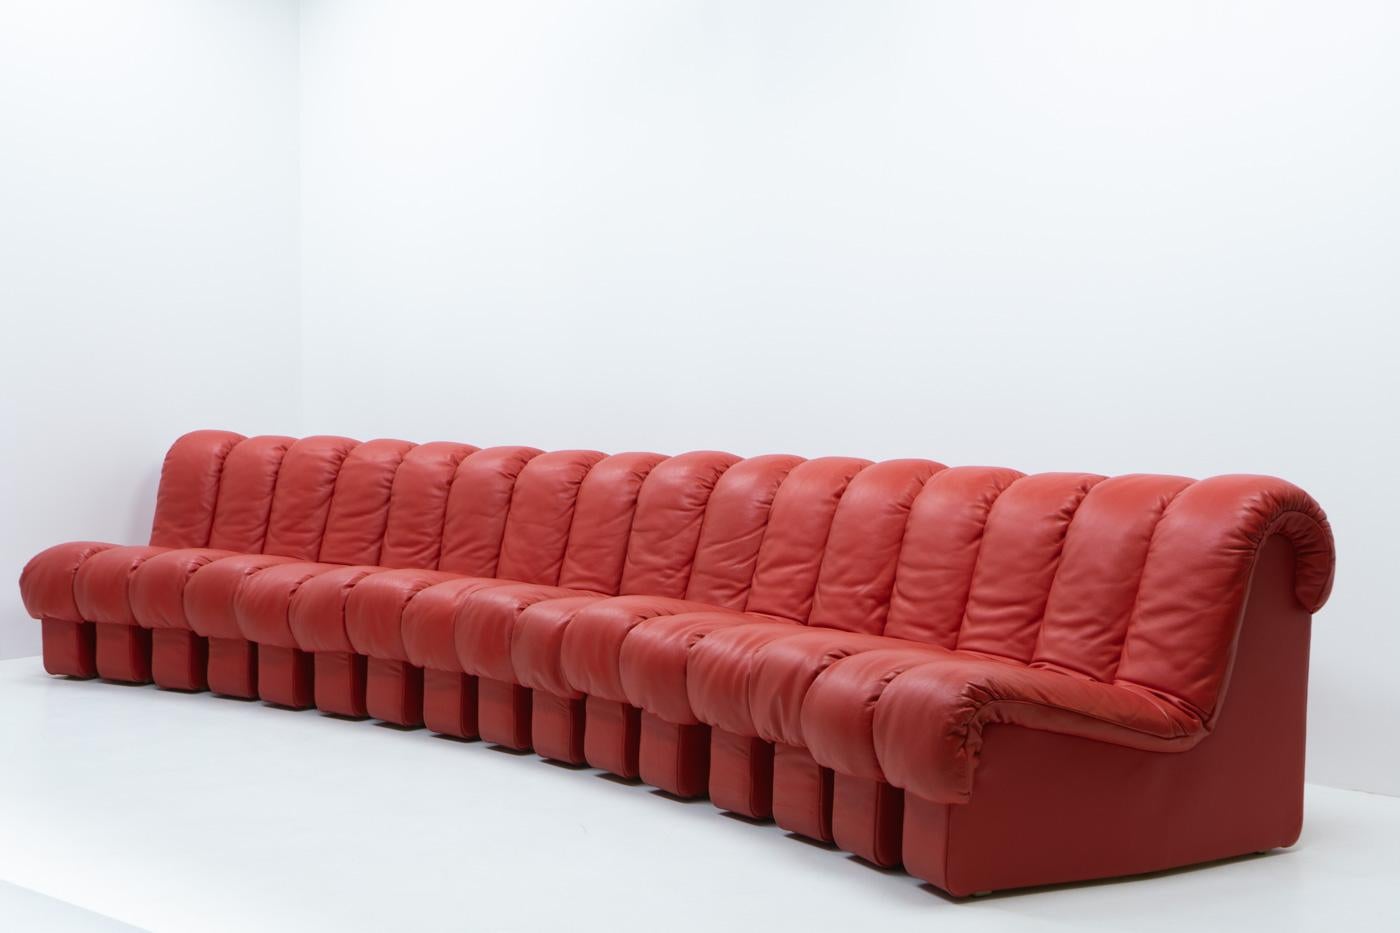 Swiss De Sede DS-600 “Non- Stop” Sofa (16 segments) For Sale